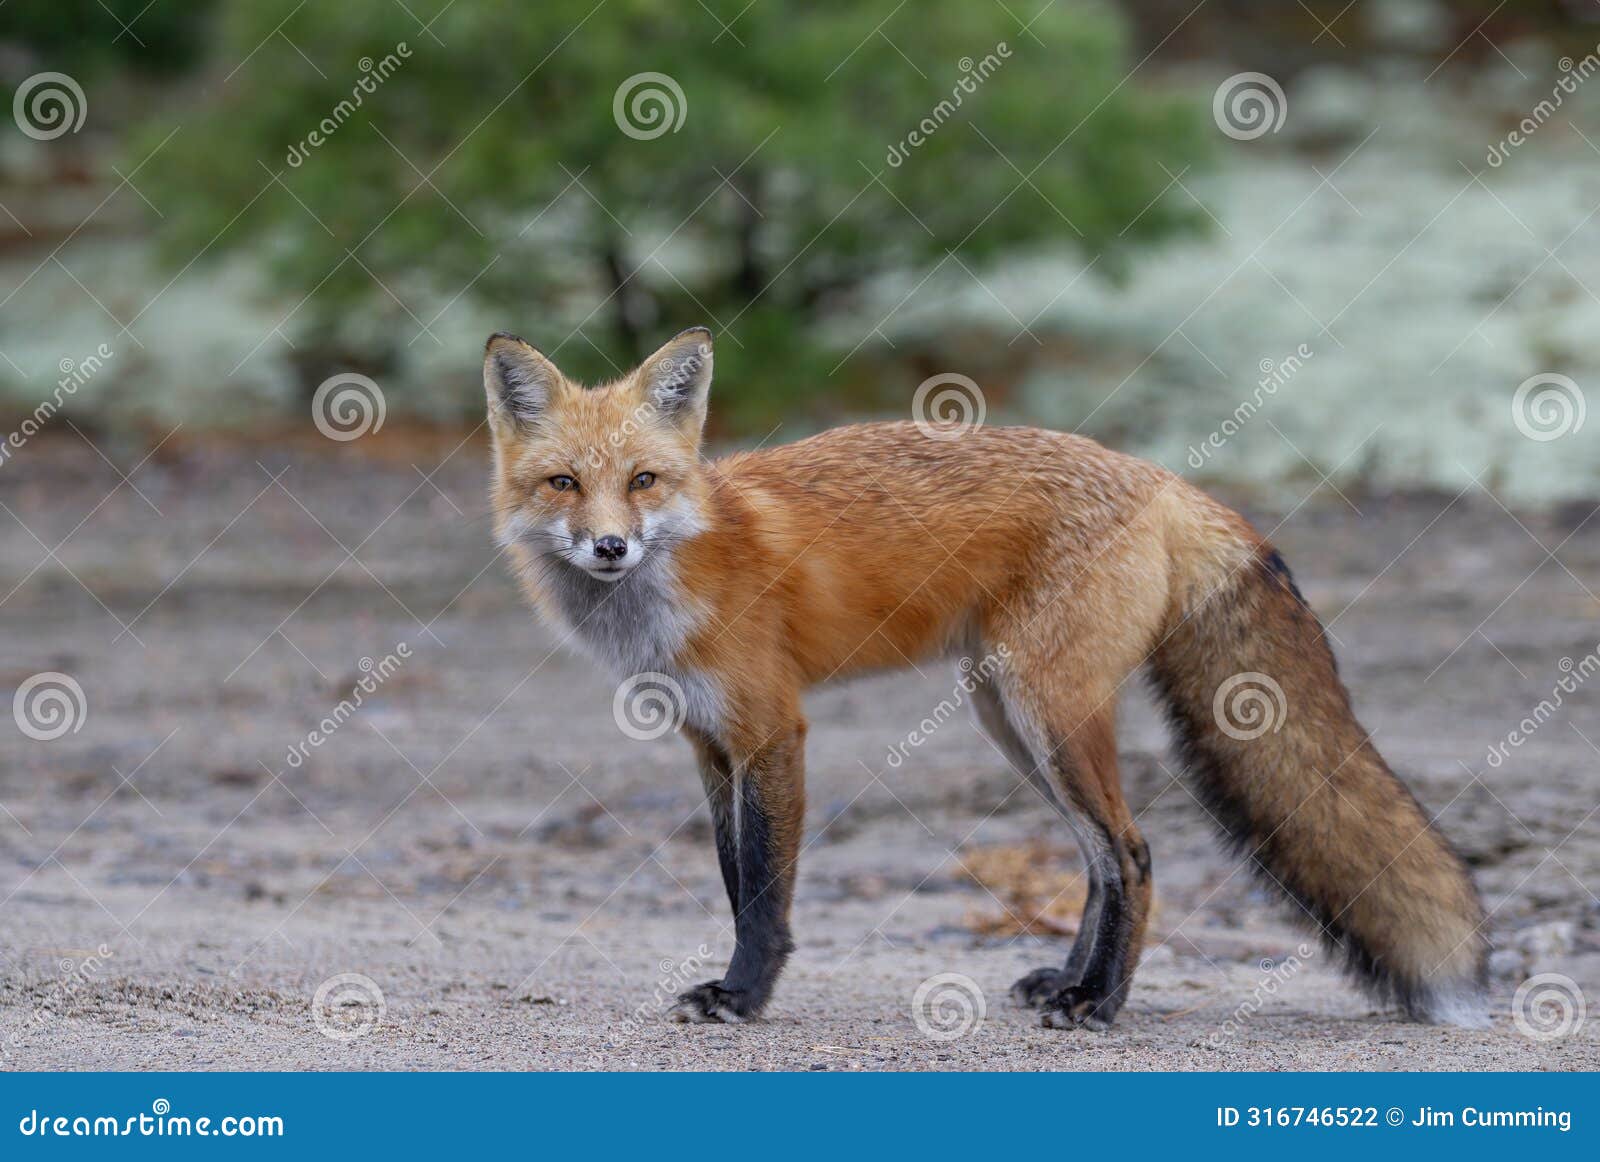 red fox in autumn in algonquin park, canada